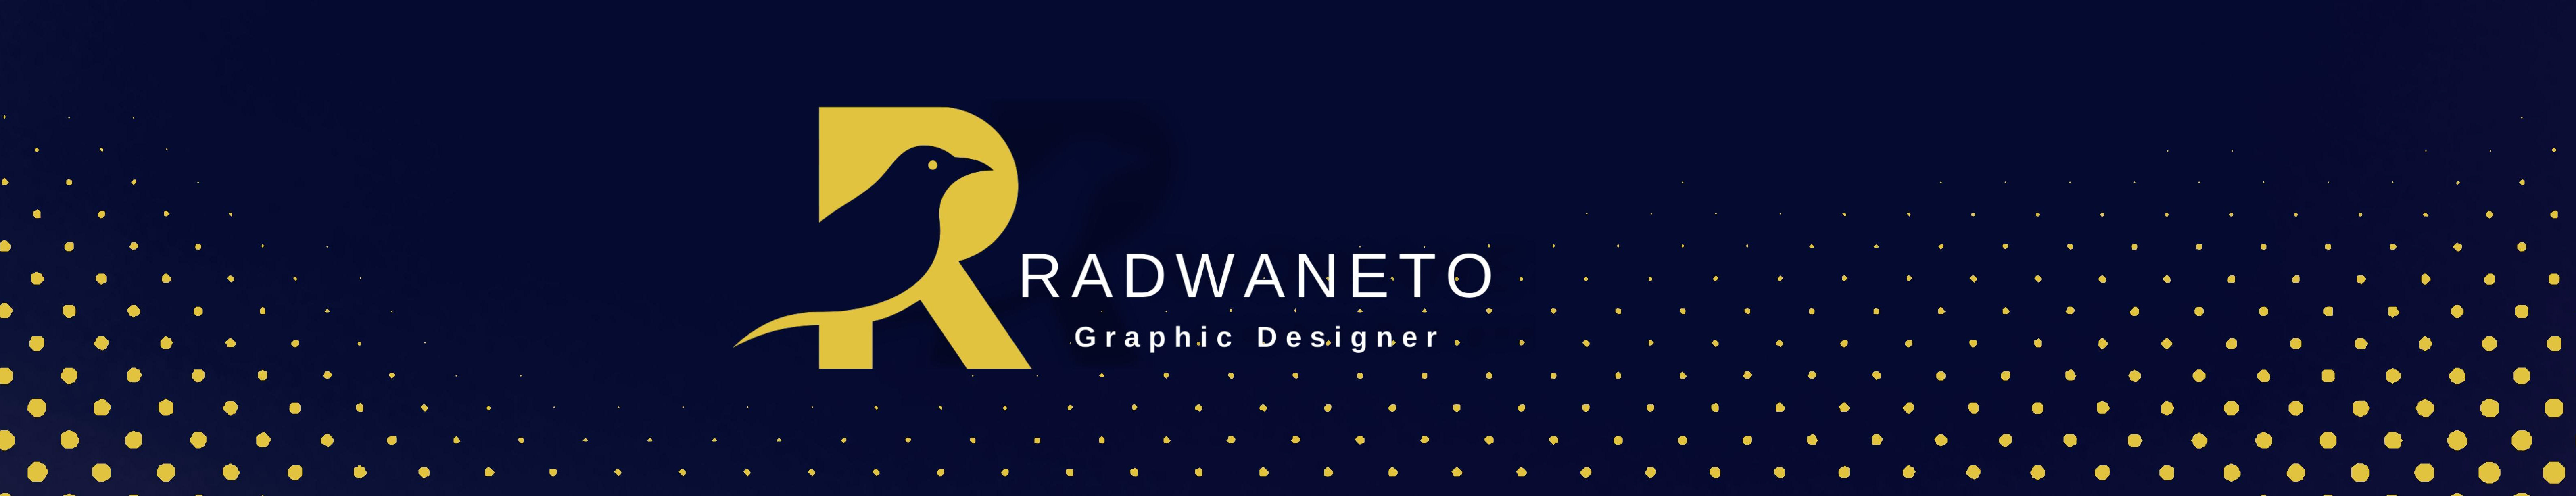 Radwaneto ™'s profile banner